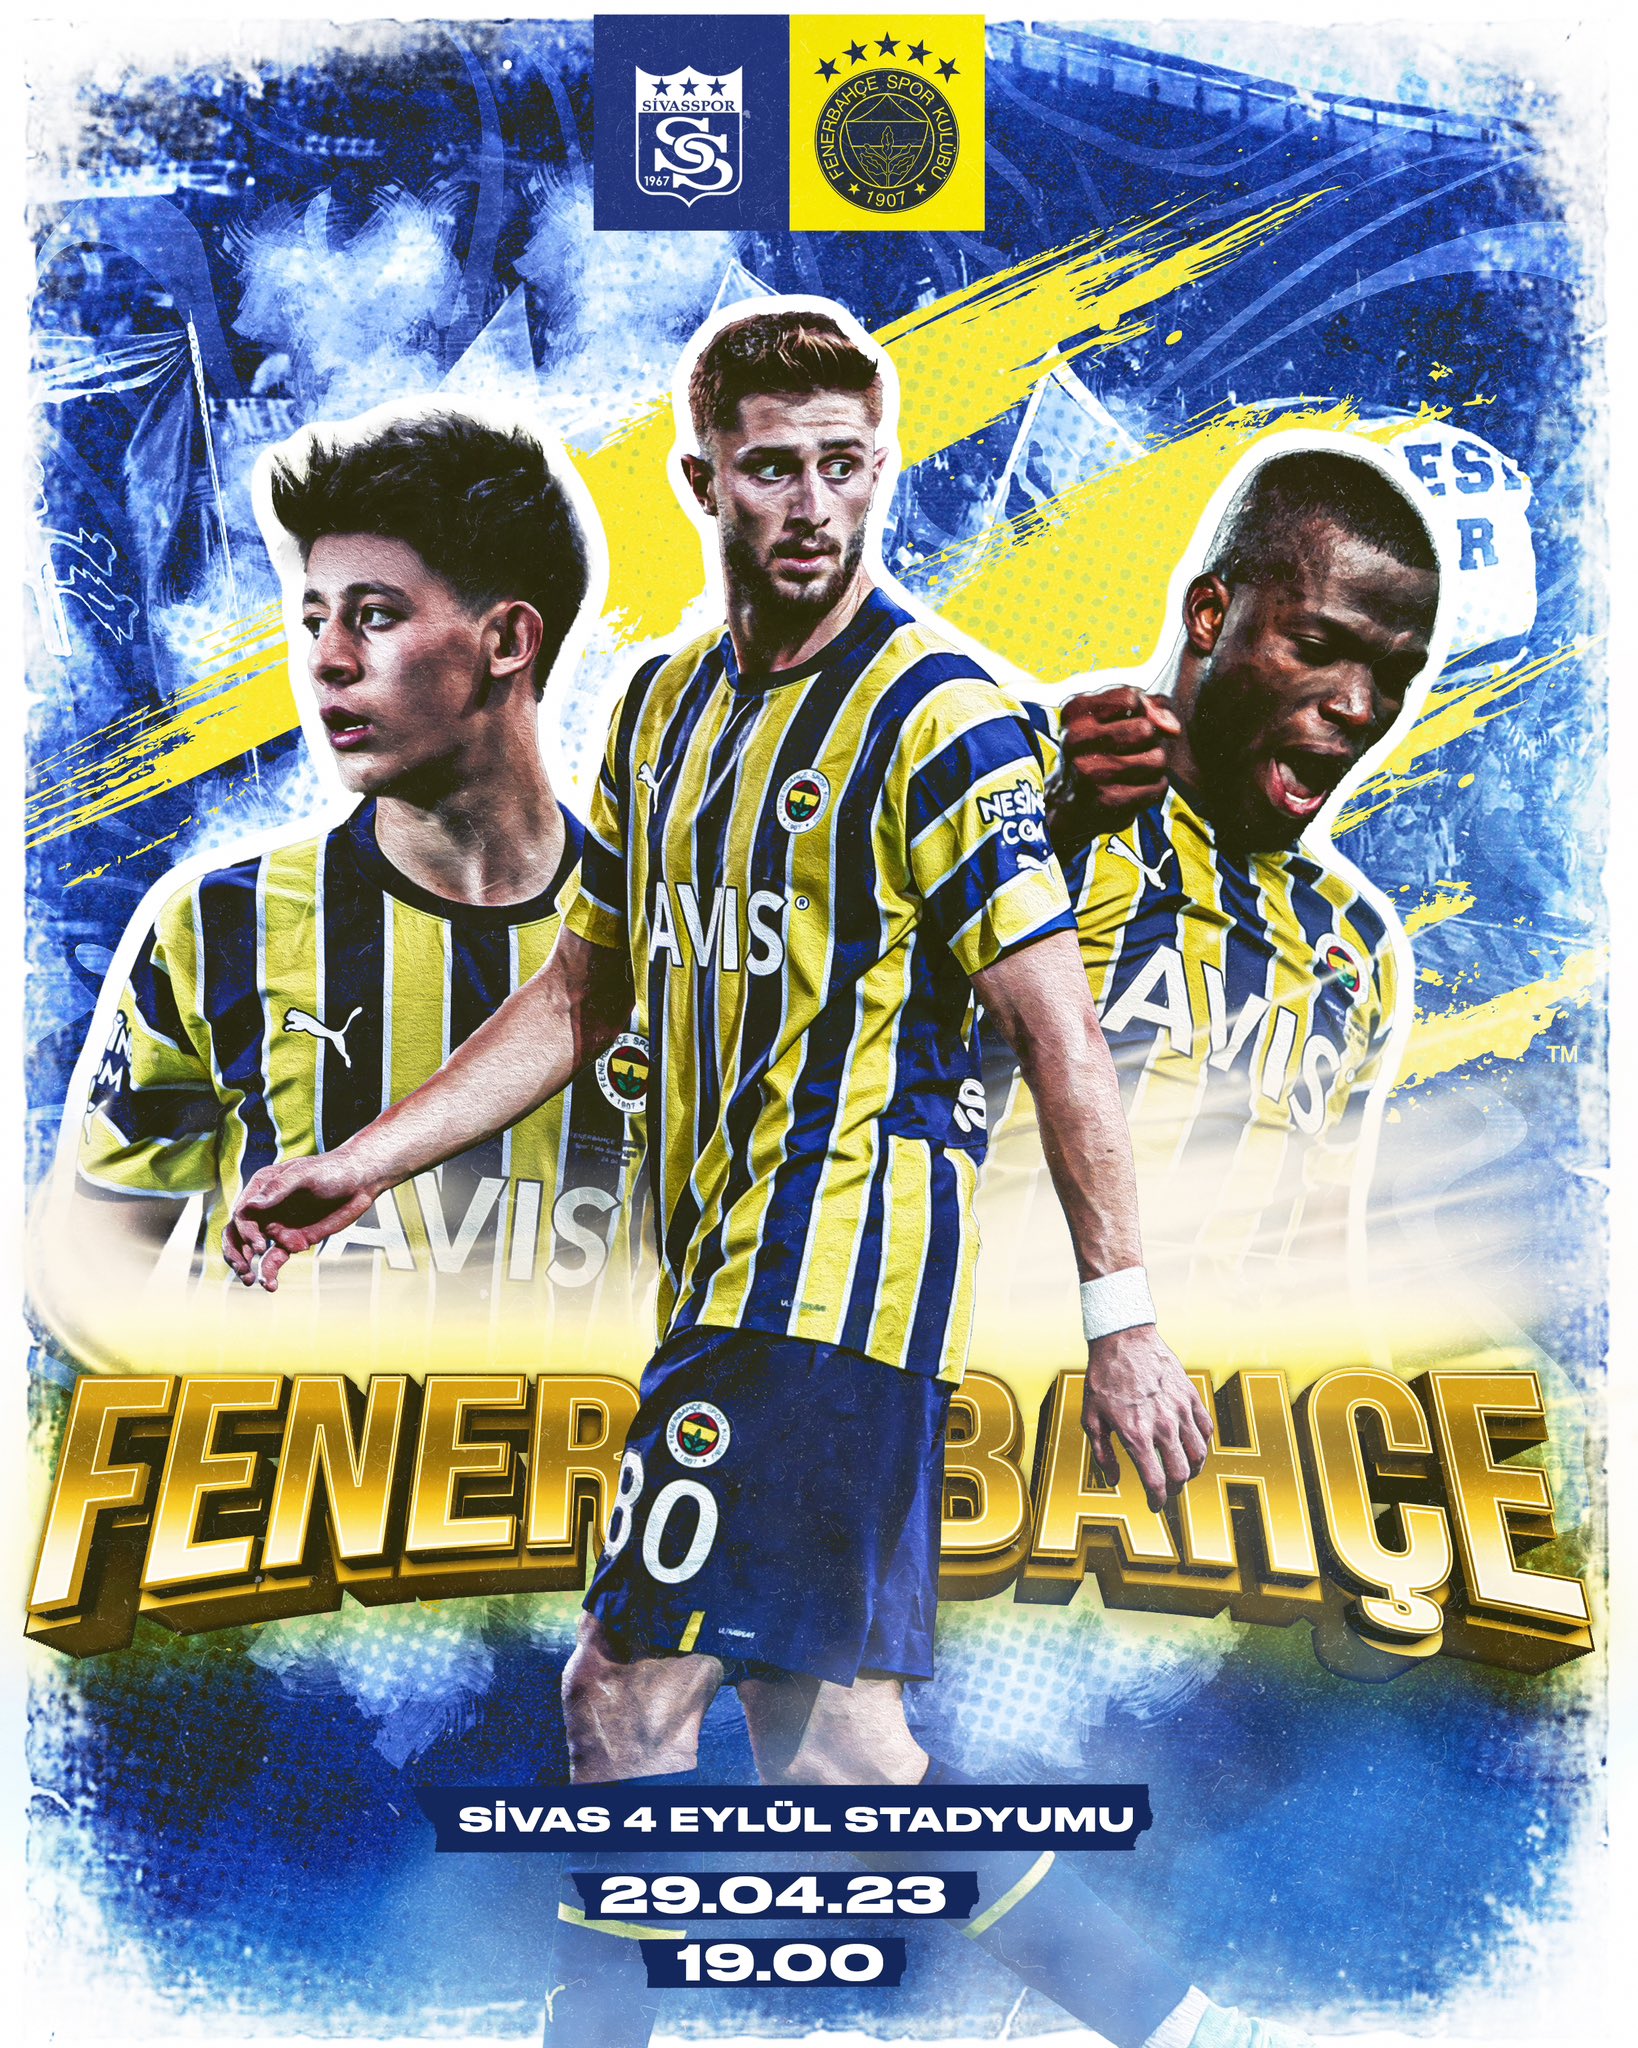 Fenerbahçe vs Karagümrük: The Clash of Istanbul's Football Giants